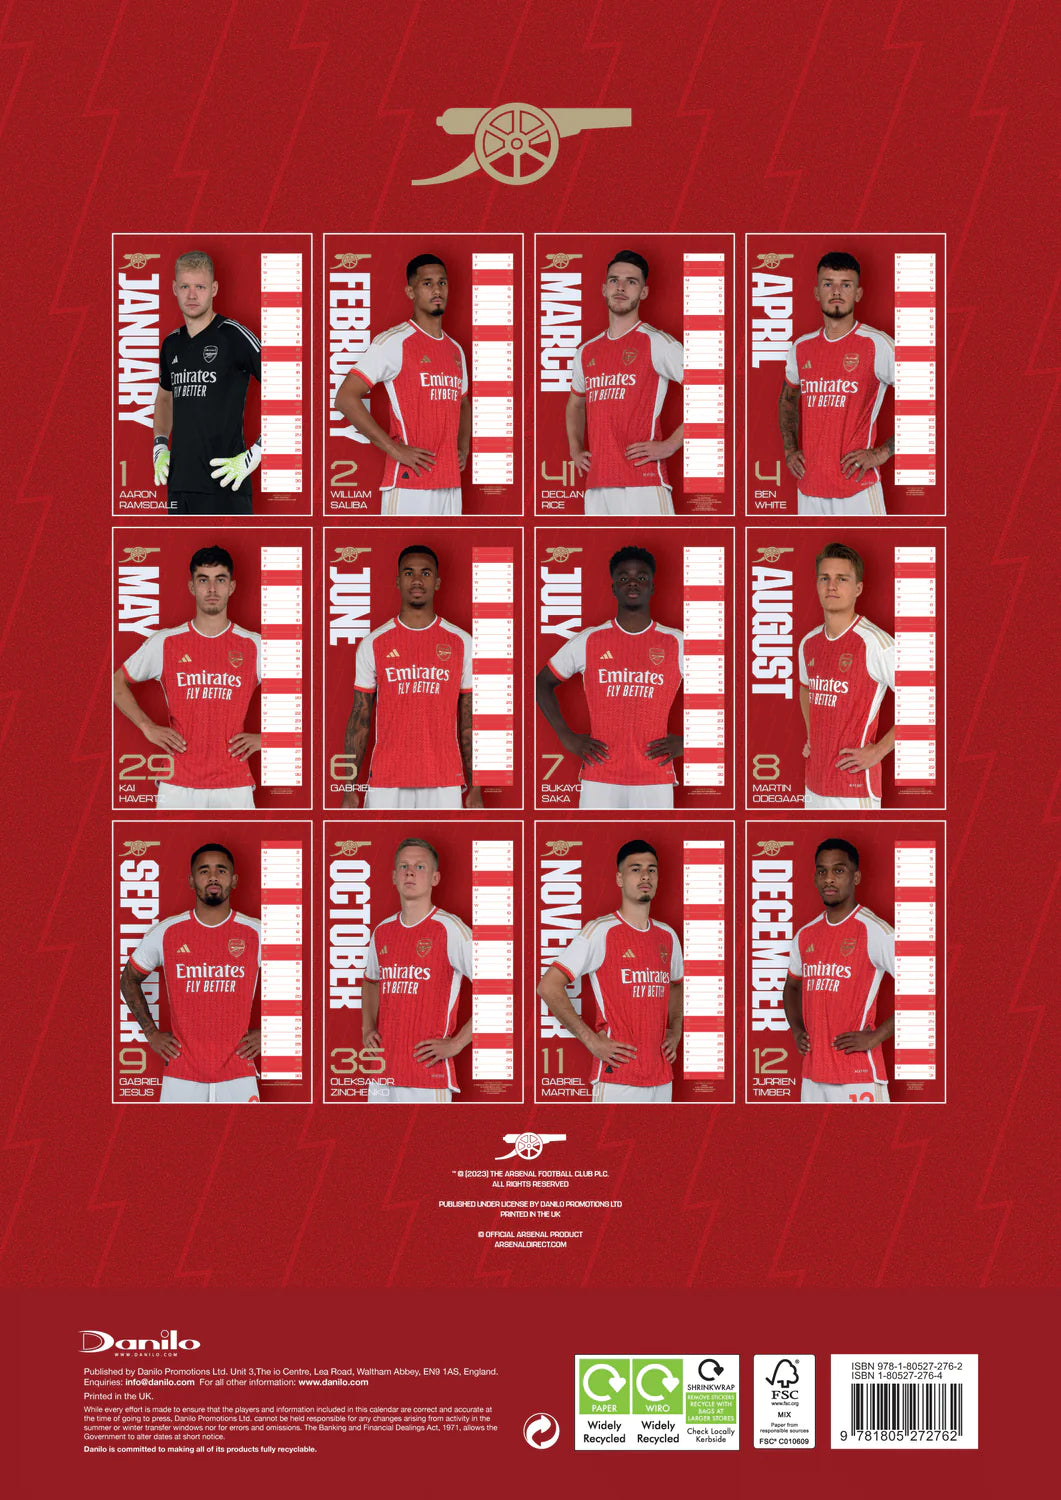 Arsenal 2023 Official Calendar